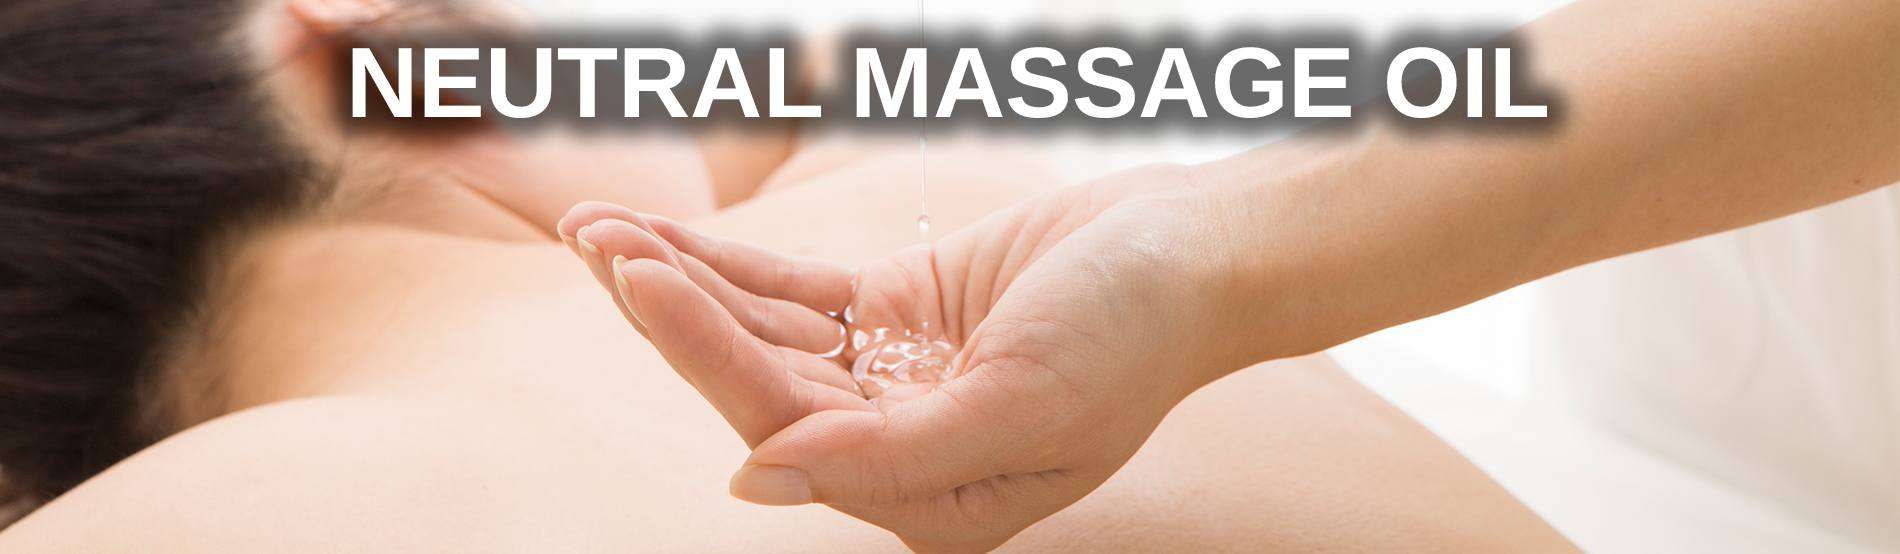 Massage Oil Neutral Basic